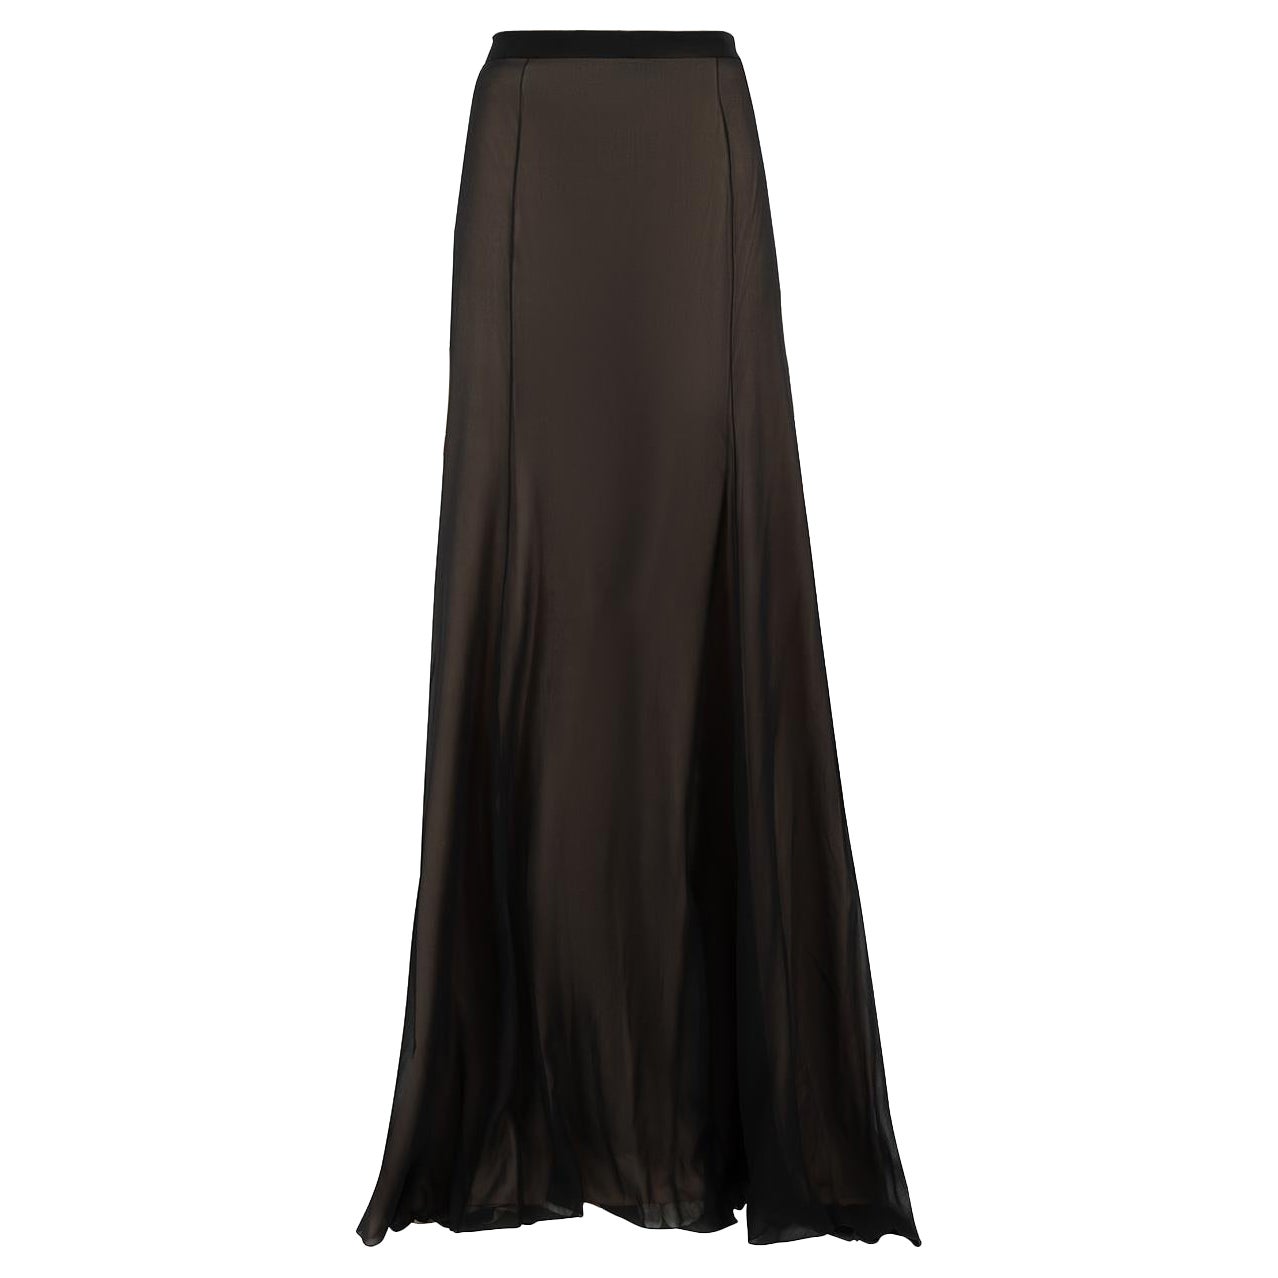 Honayda Black Sheer Overlay Maxi Skirt Size XXL For Sale